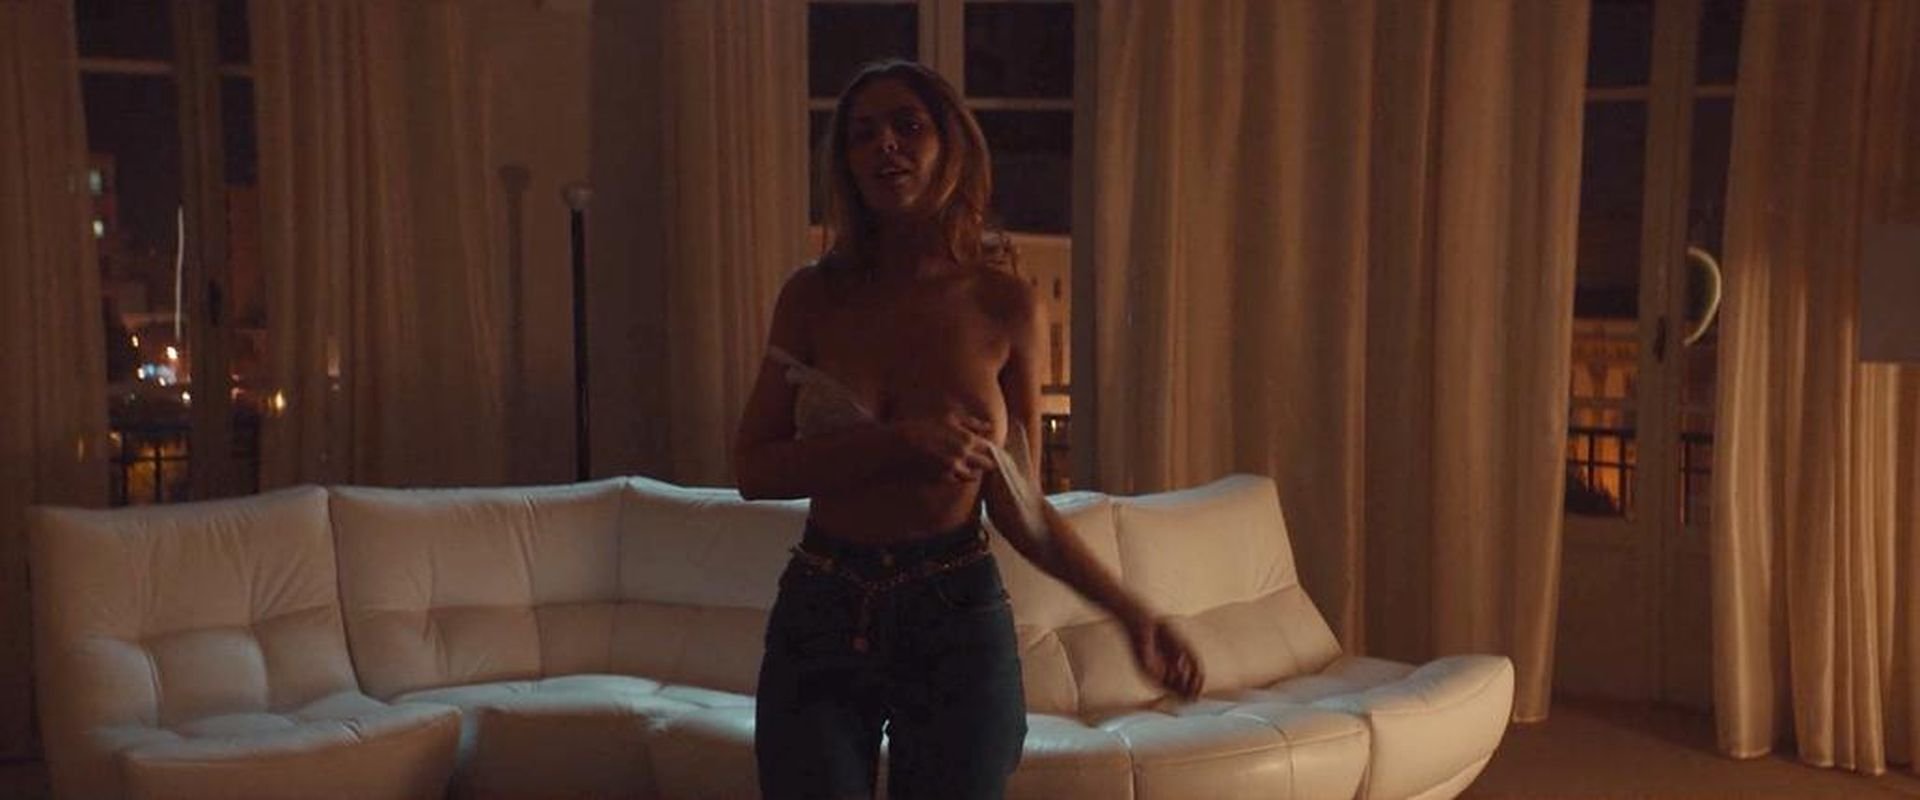 Watch Marie-Ange Casta’s nude sex scene from "Lo spietato" (The R...